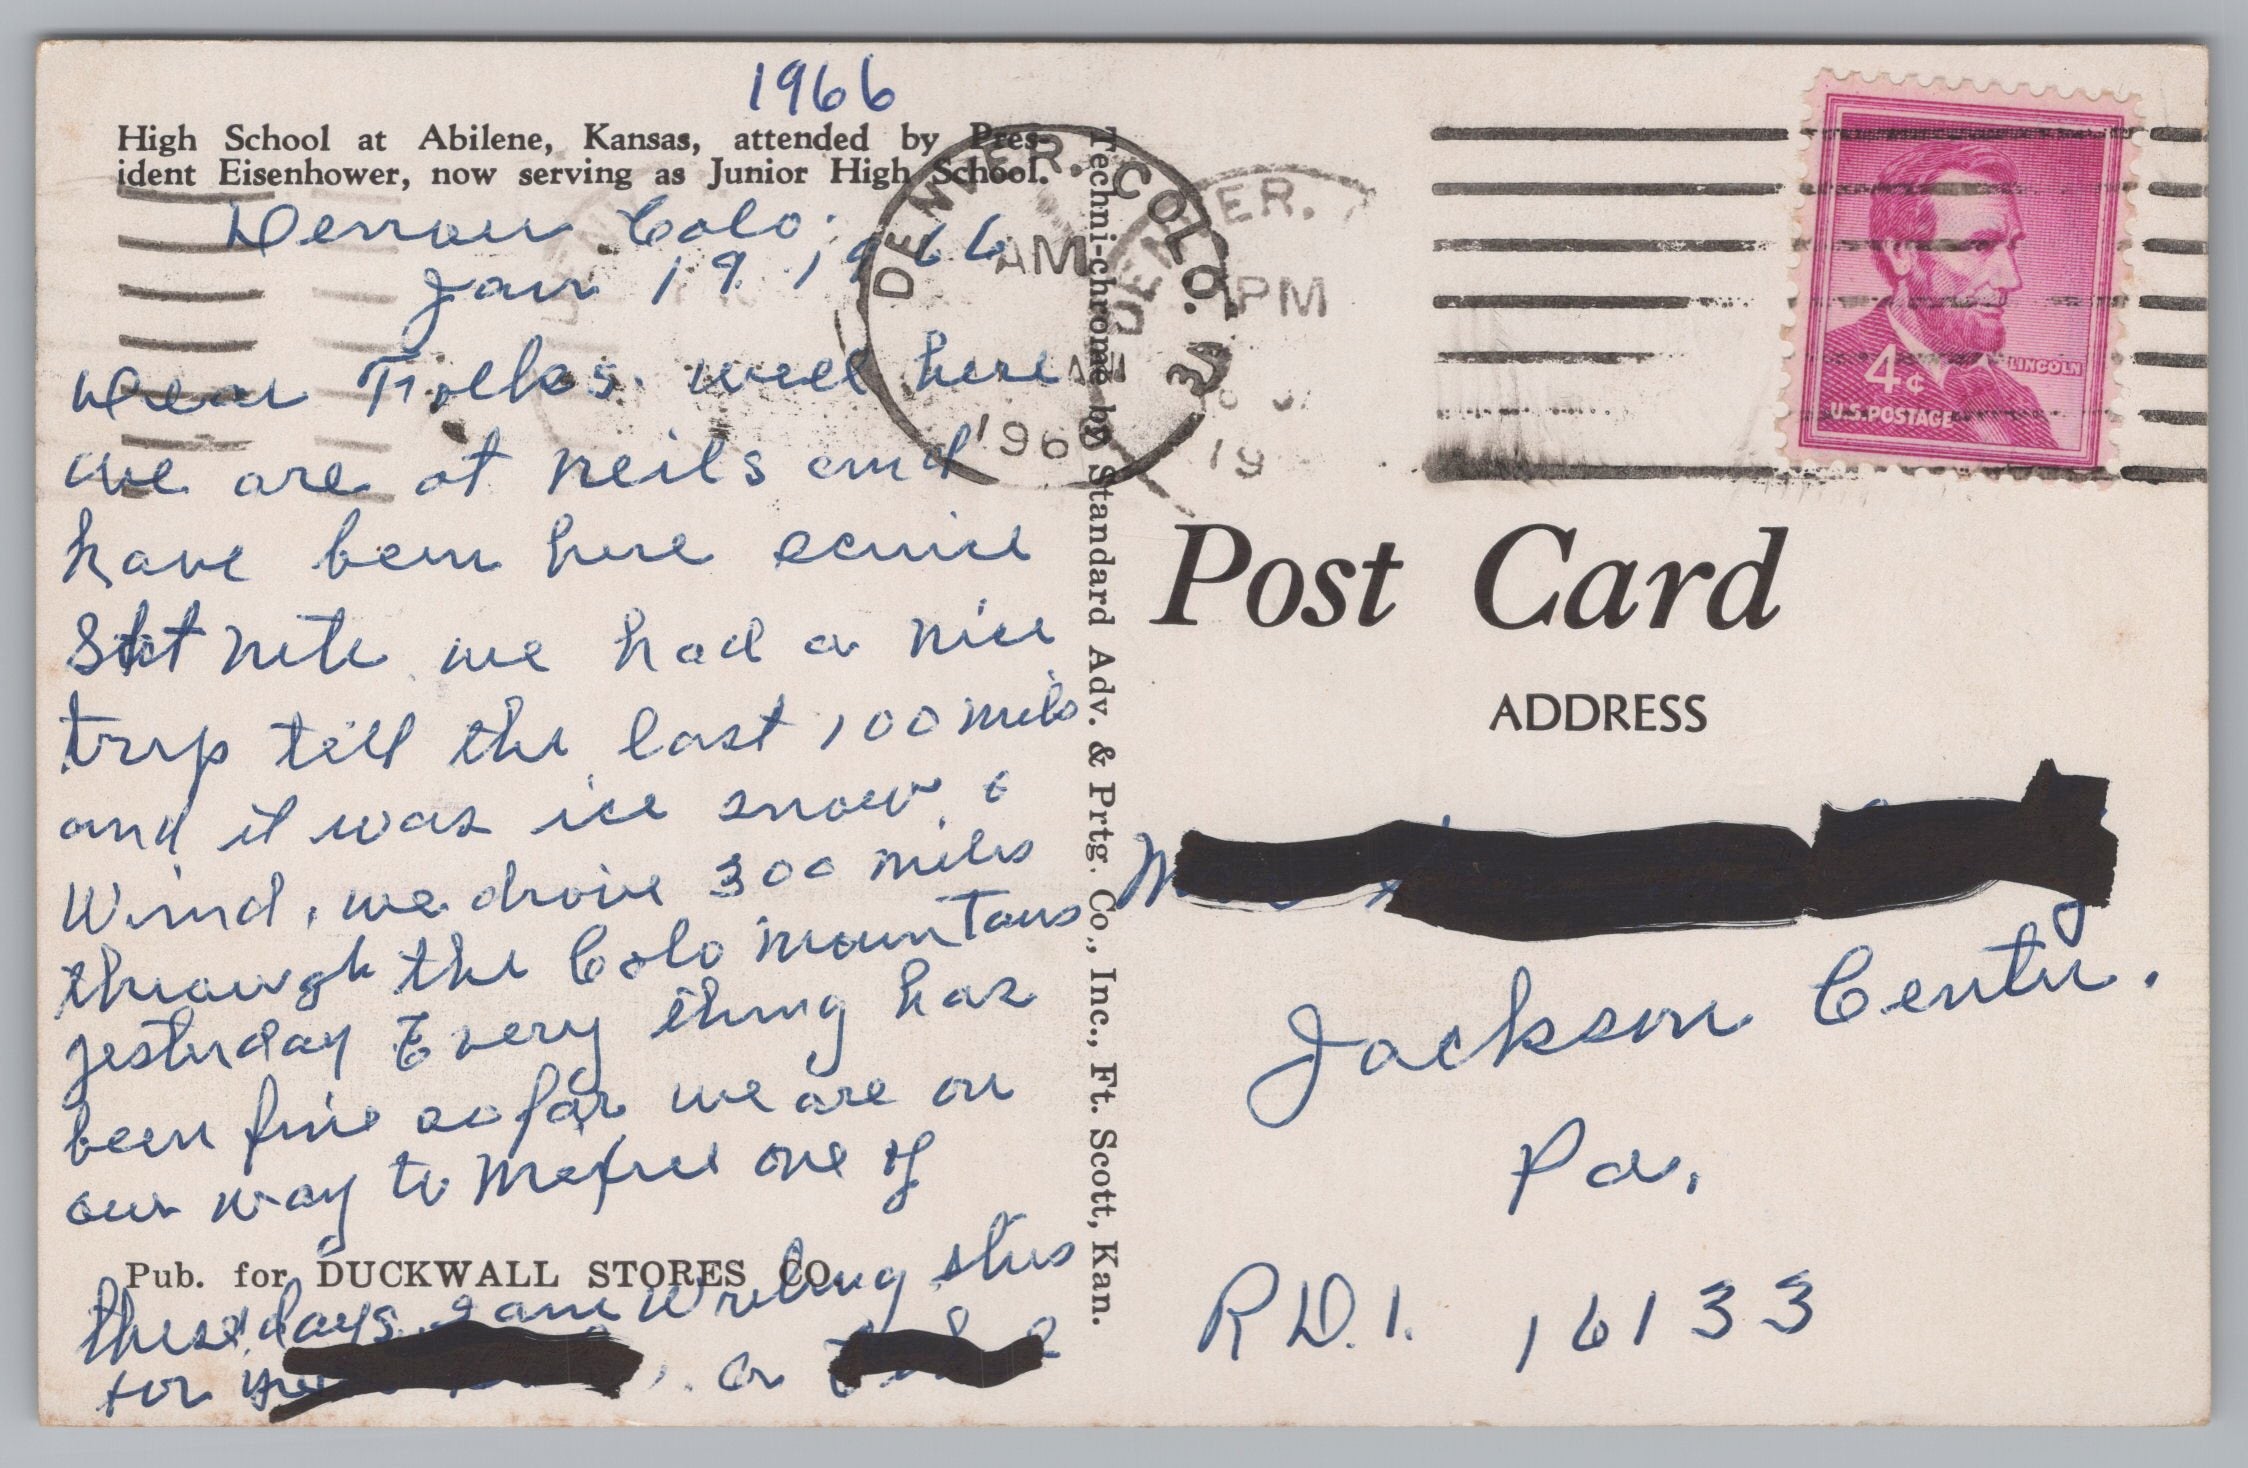 High School At Abilene, Kansas, Vintage Post Card.